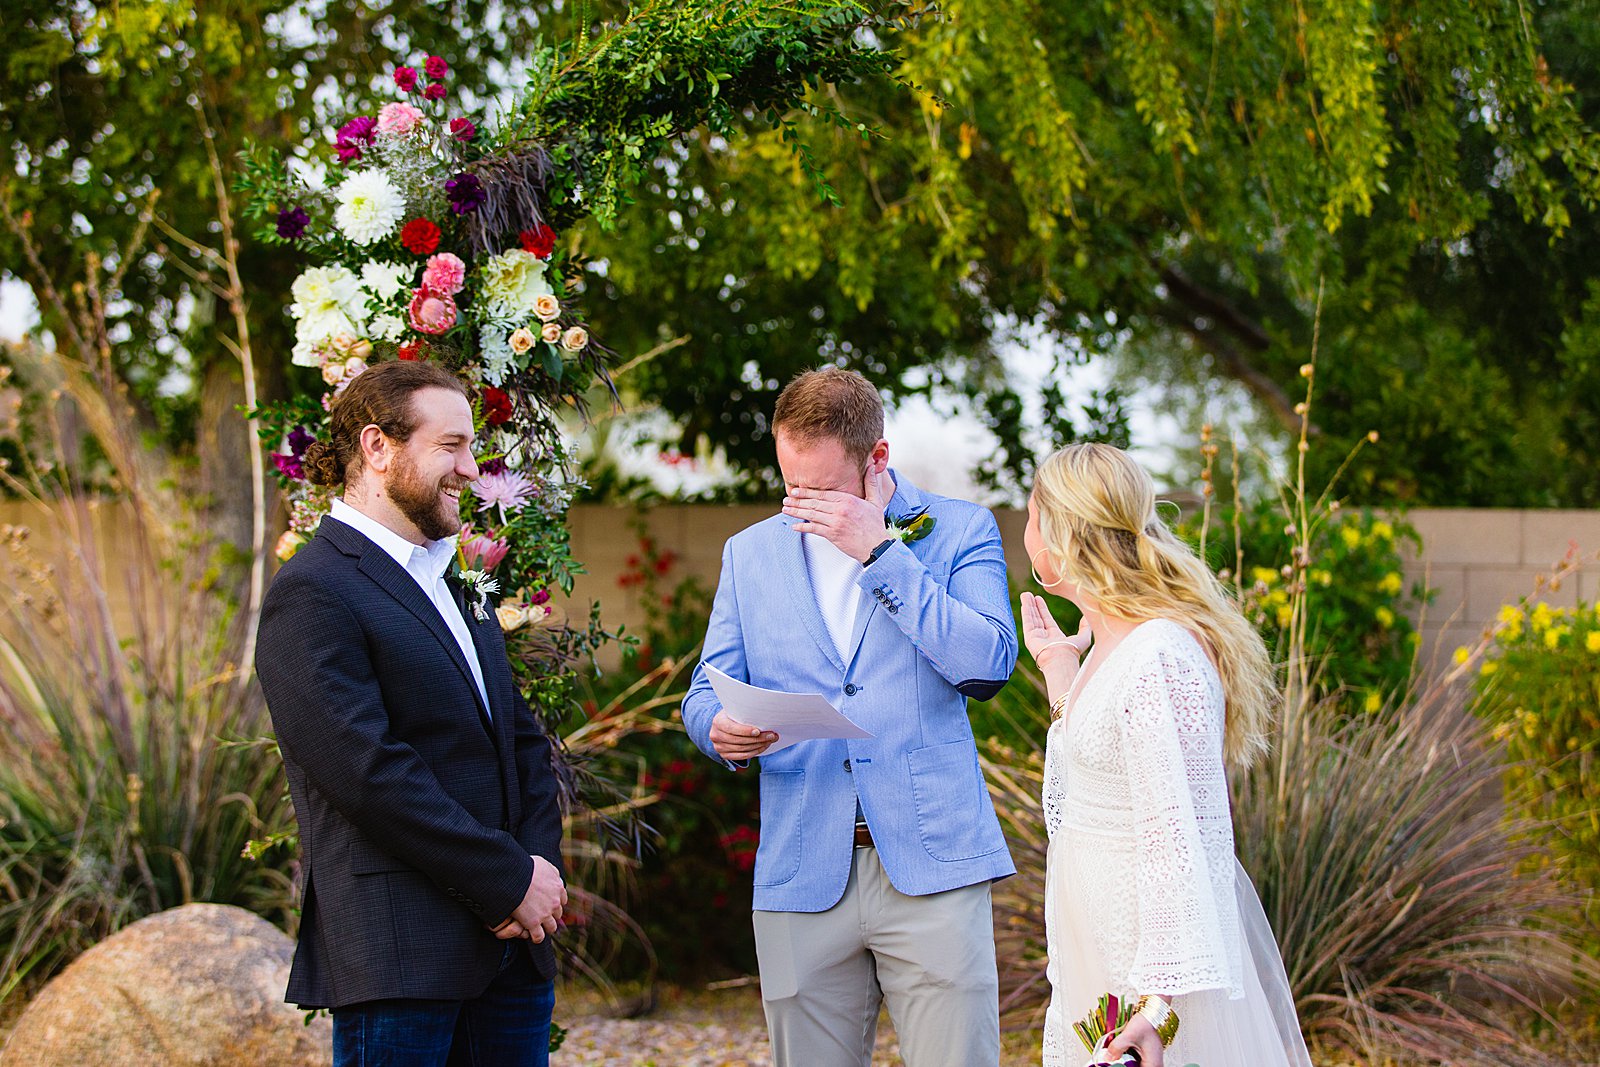 Wedding ceremony at Backyard by Phoenix wedding photographer PMA Photography.